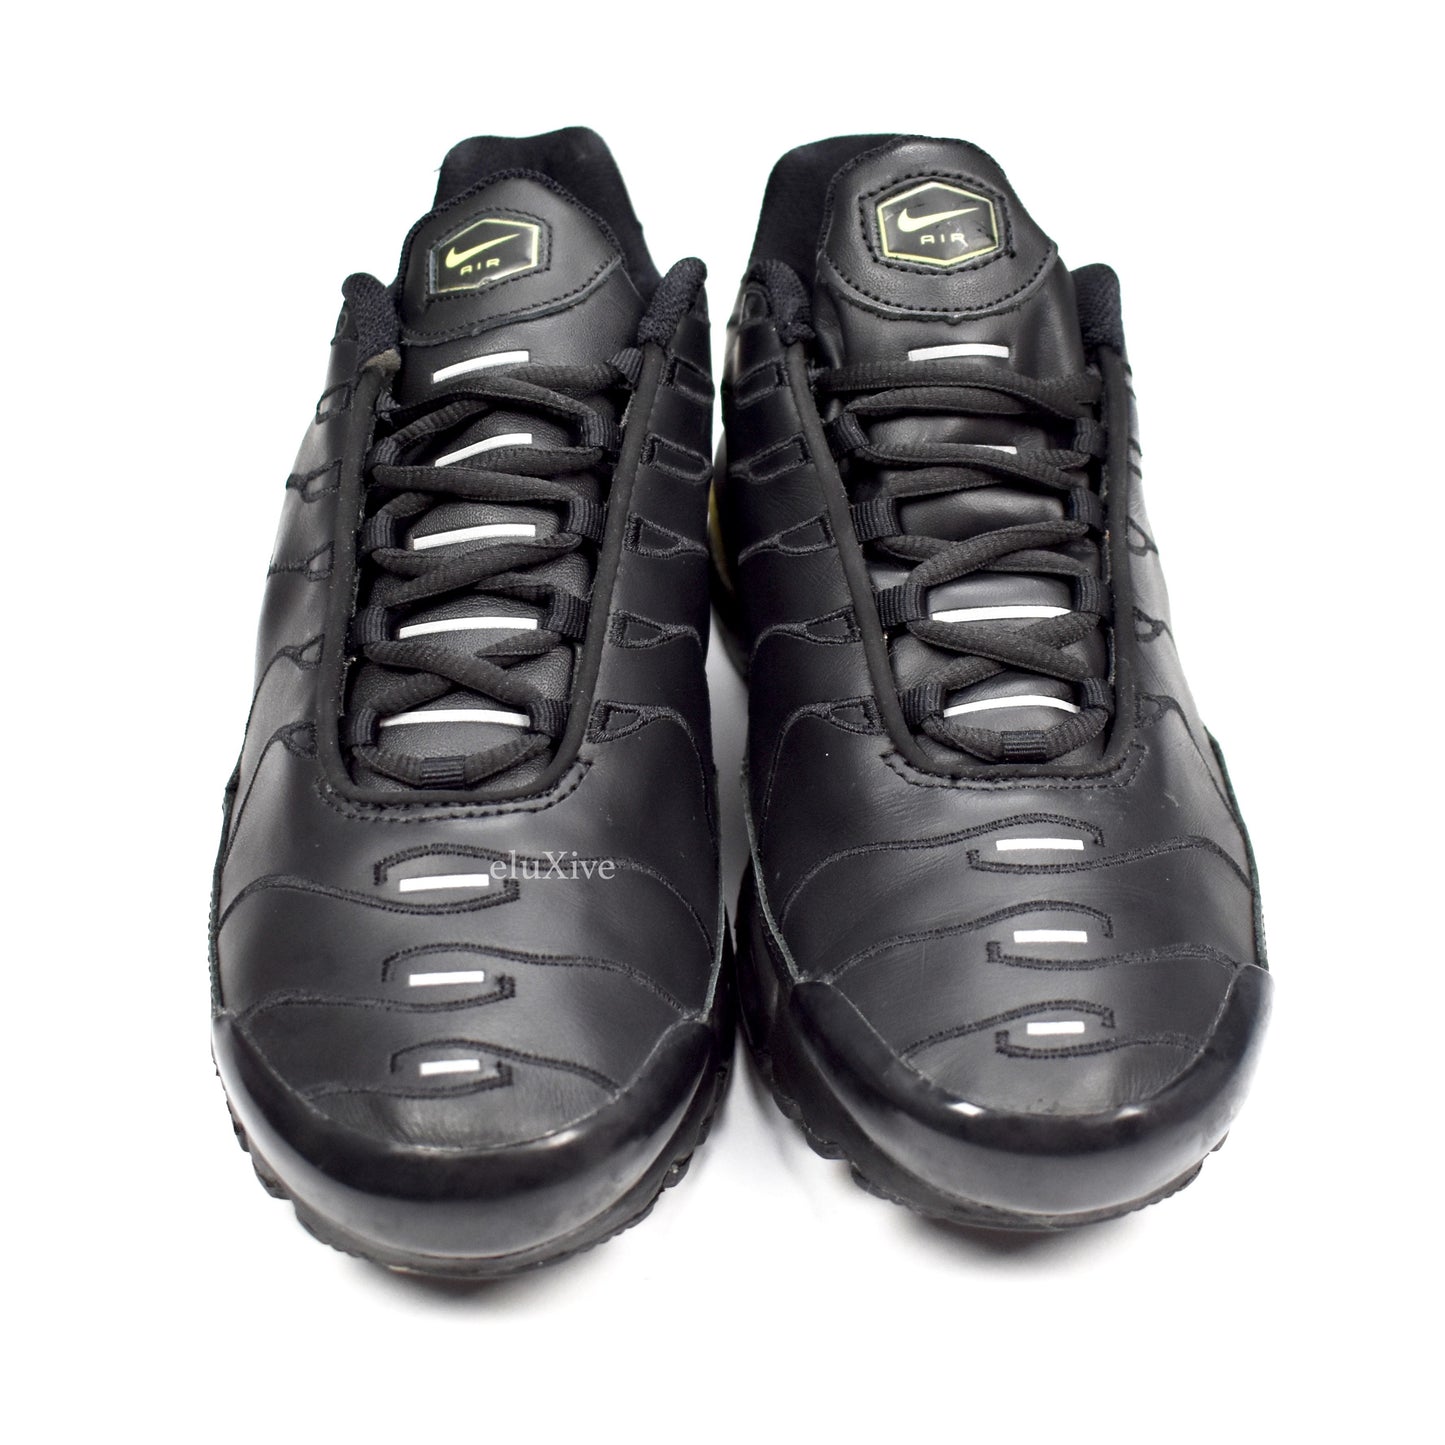 Nike - Air Max Plus TN Leather (Black/Silver)